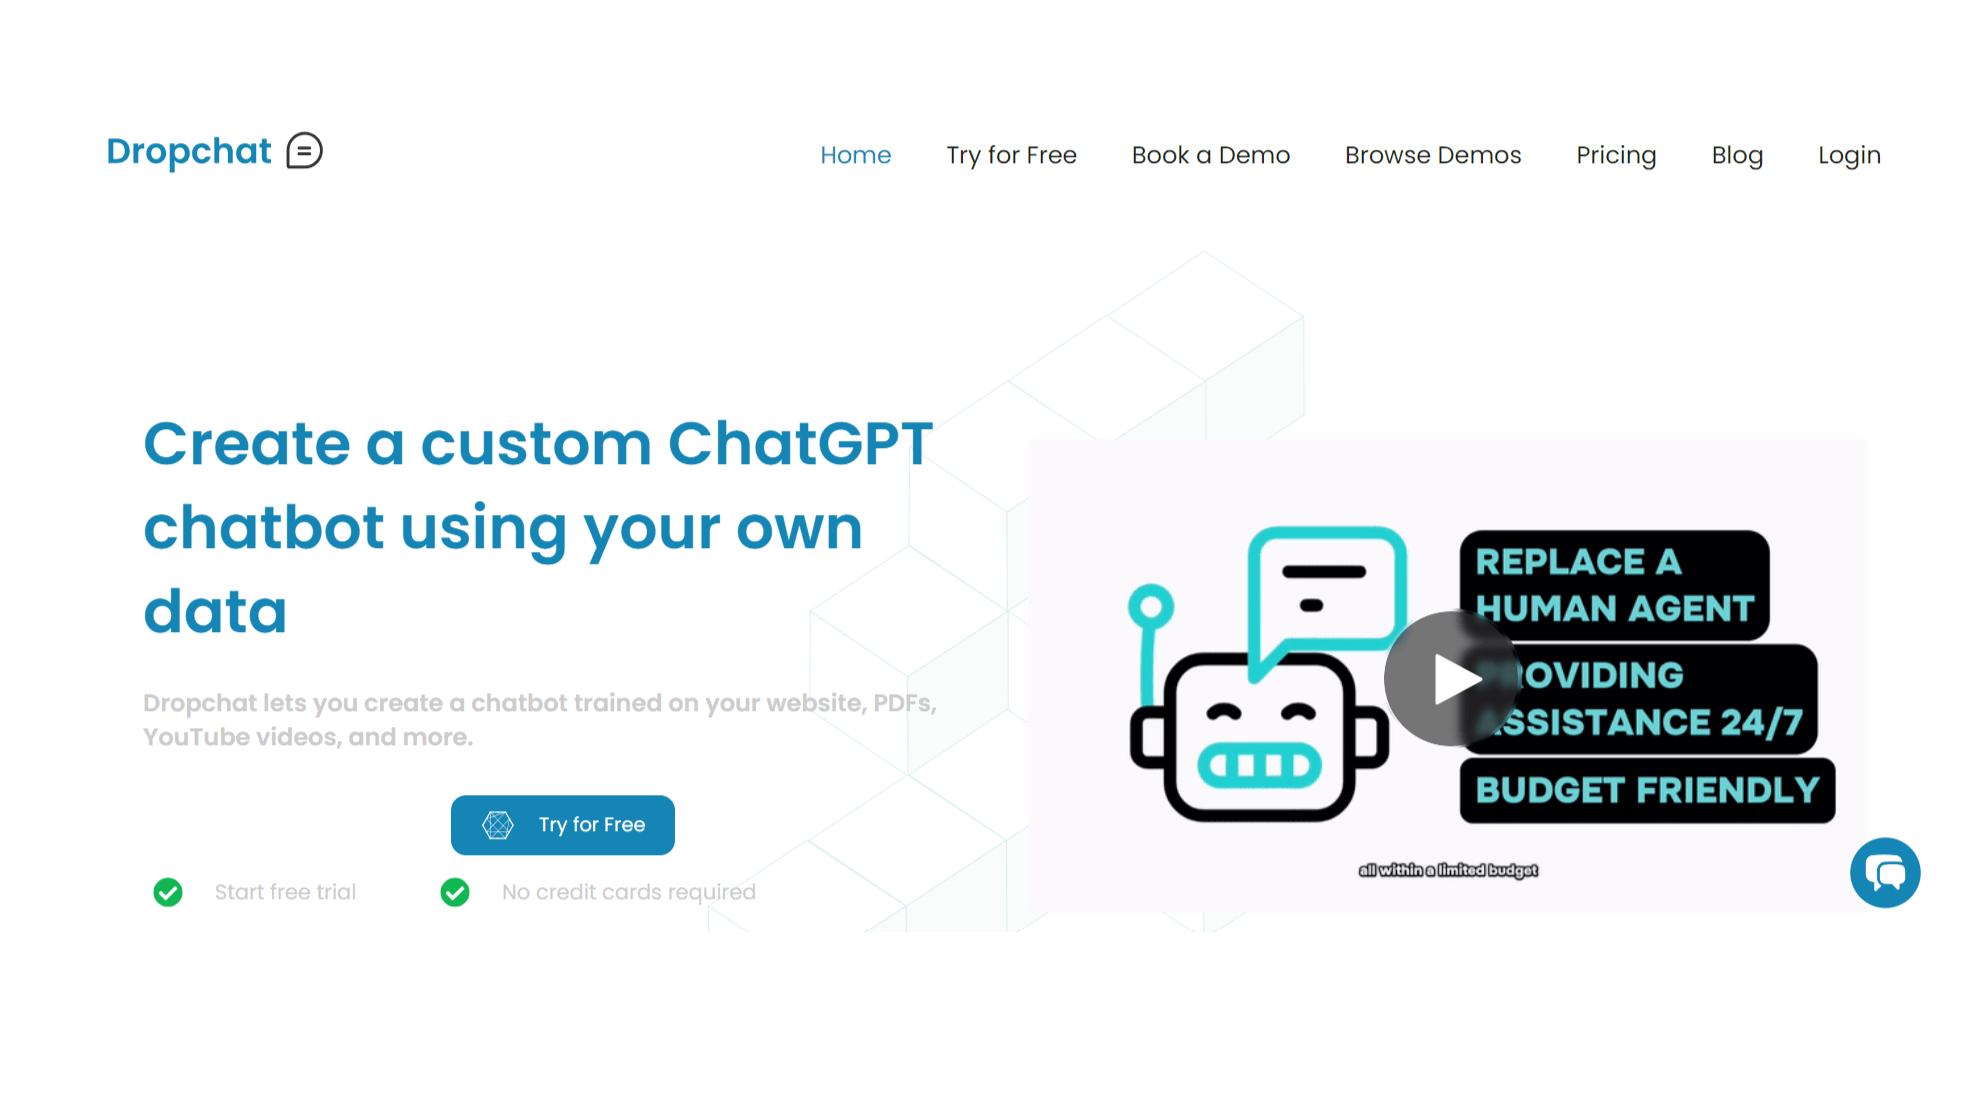 Dropchat - Custom ChatGPT Creation